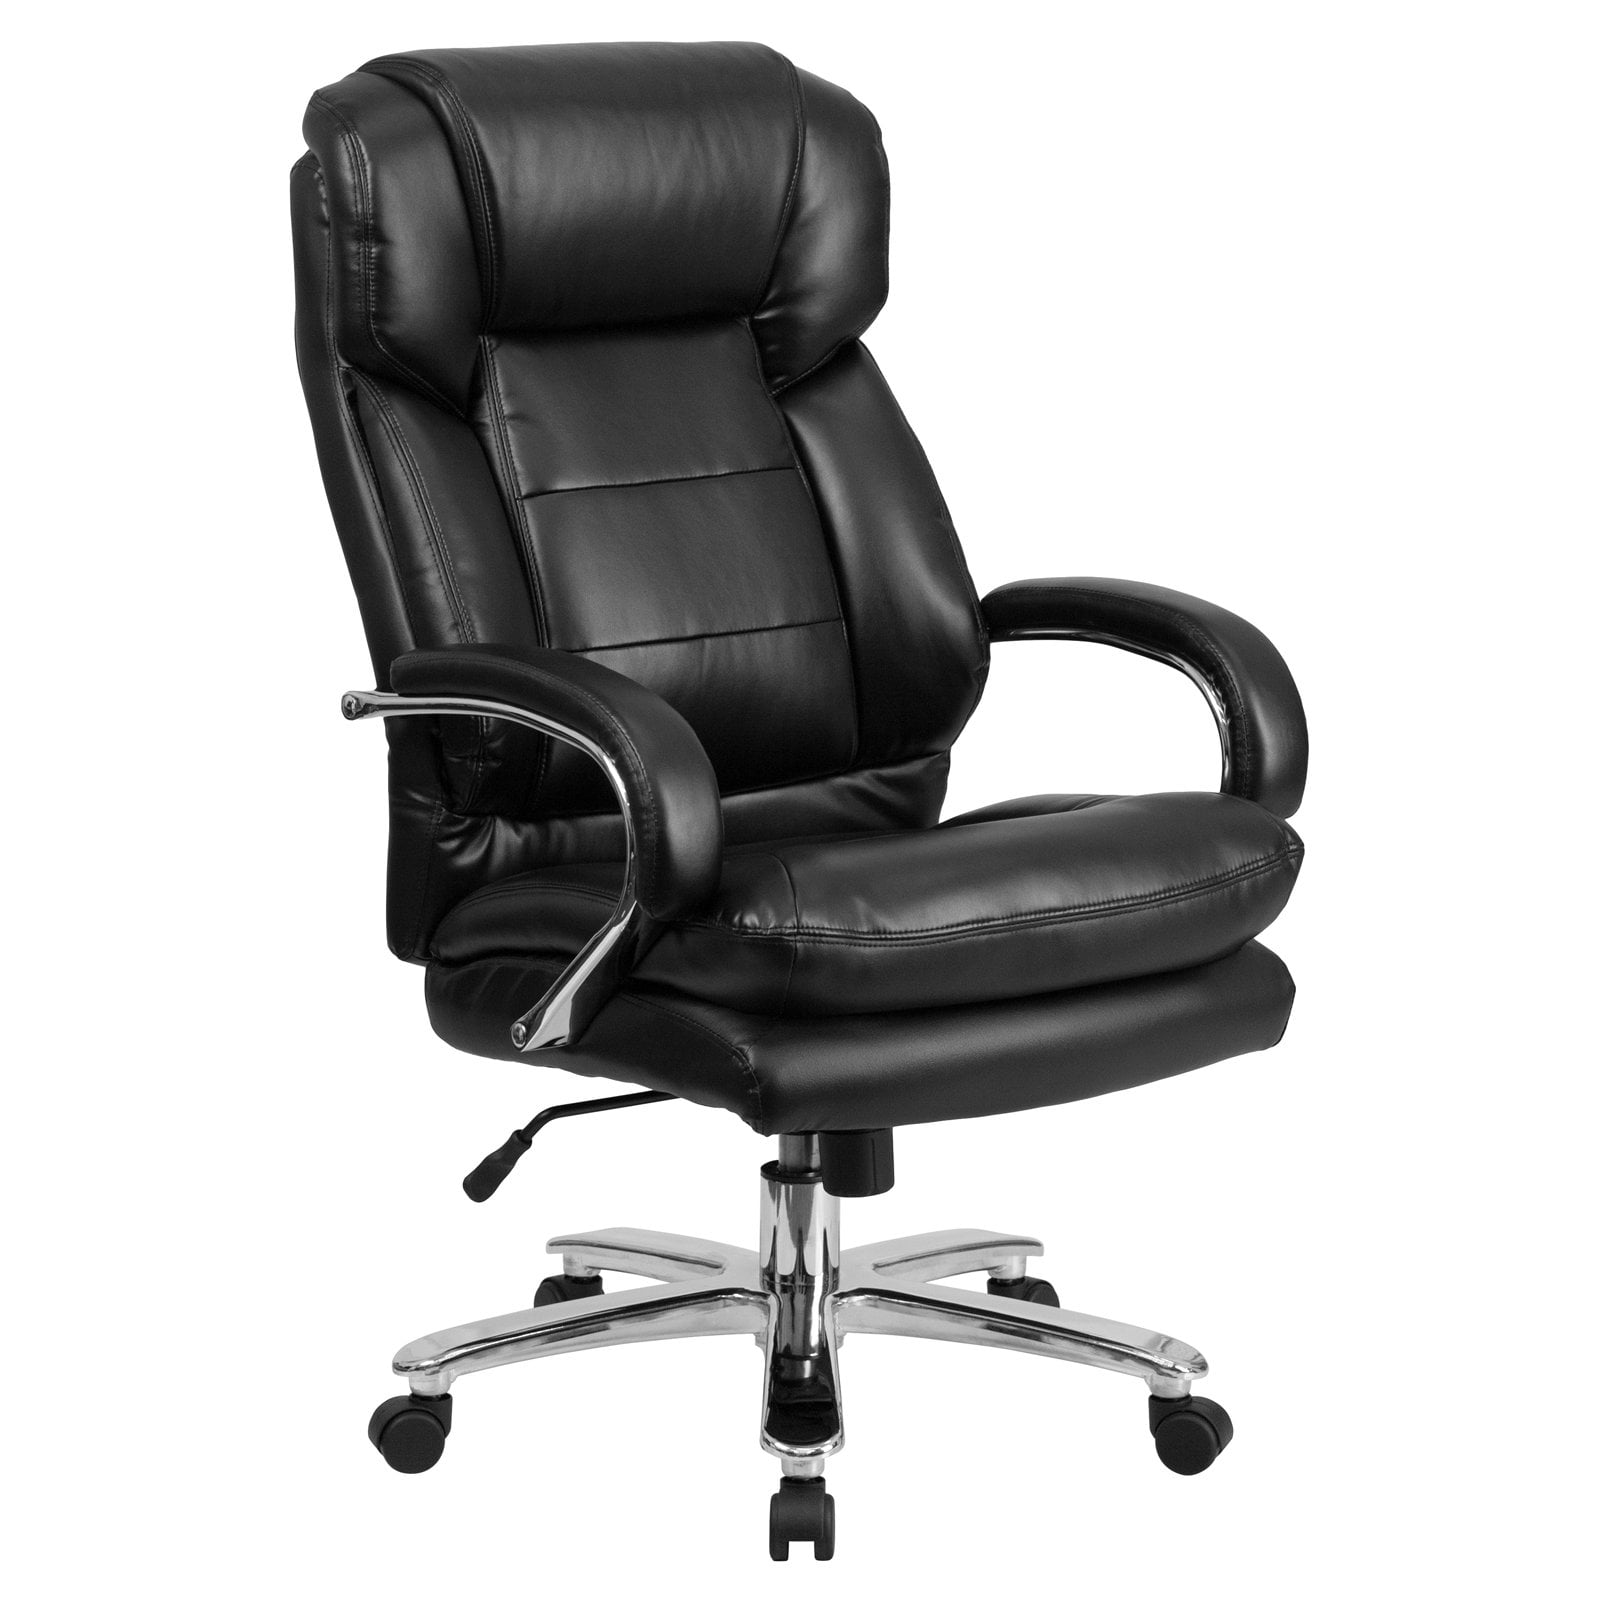 Black LeatherSoft Swivel Executive Desk Chair with Wheels - Walmart.com